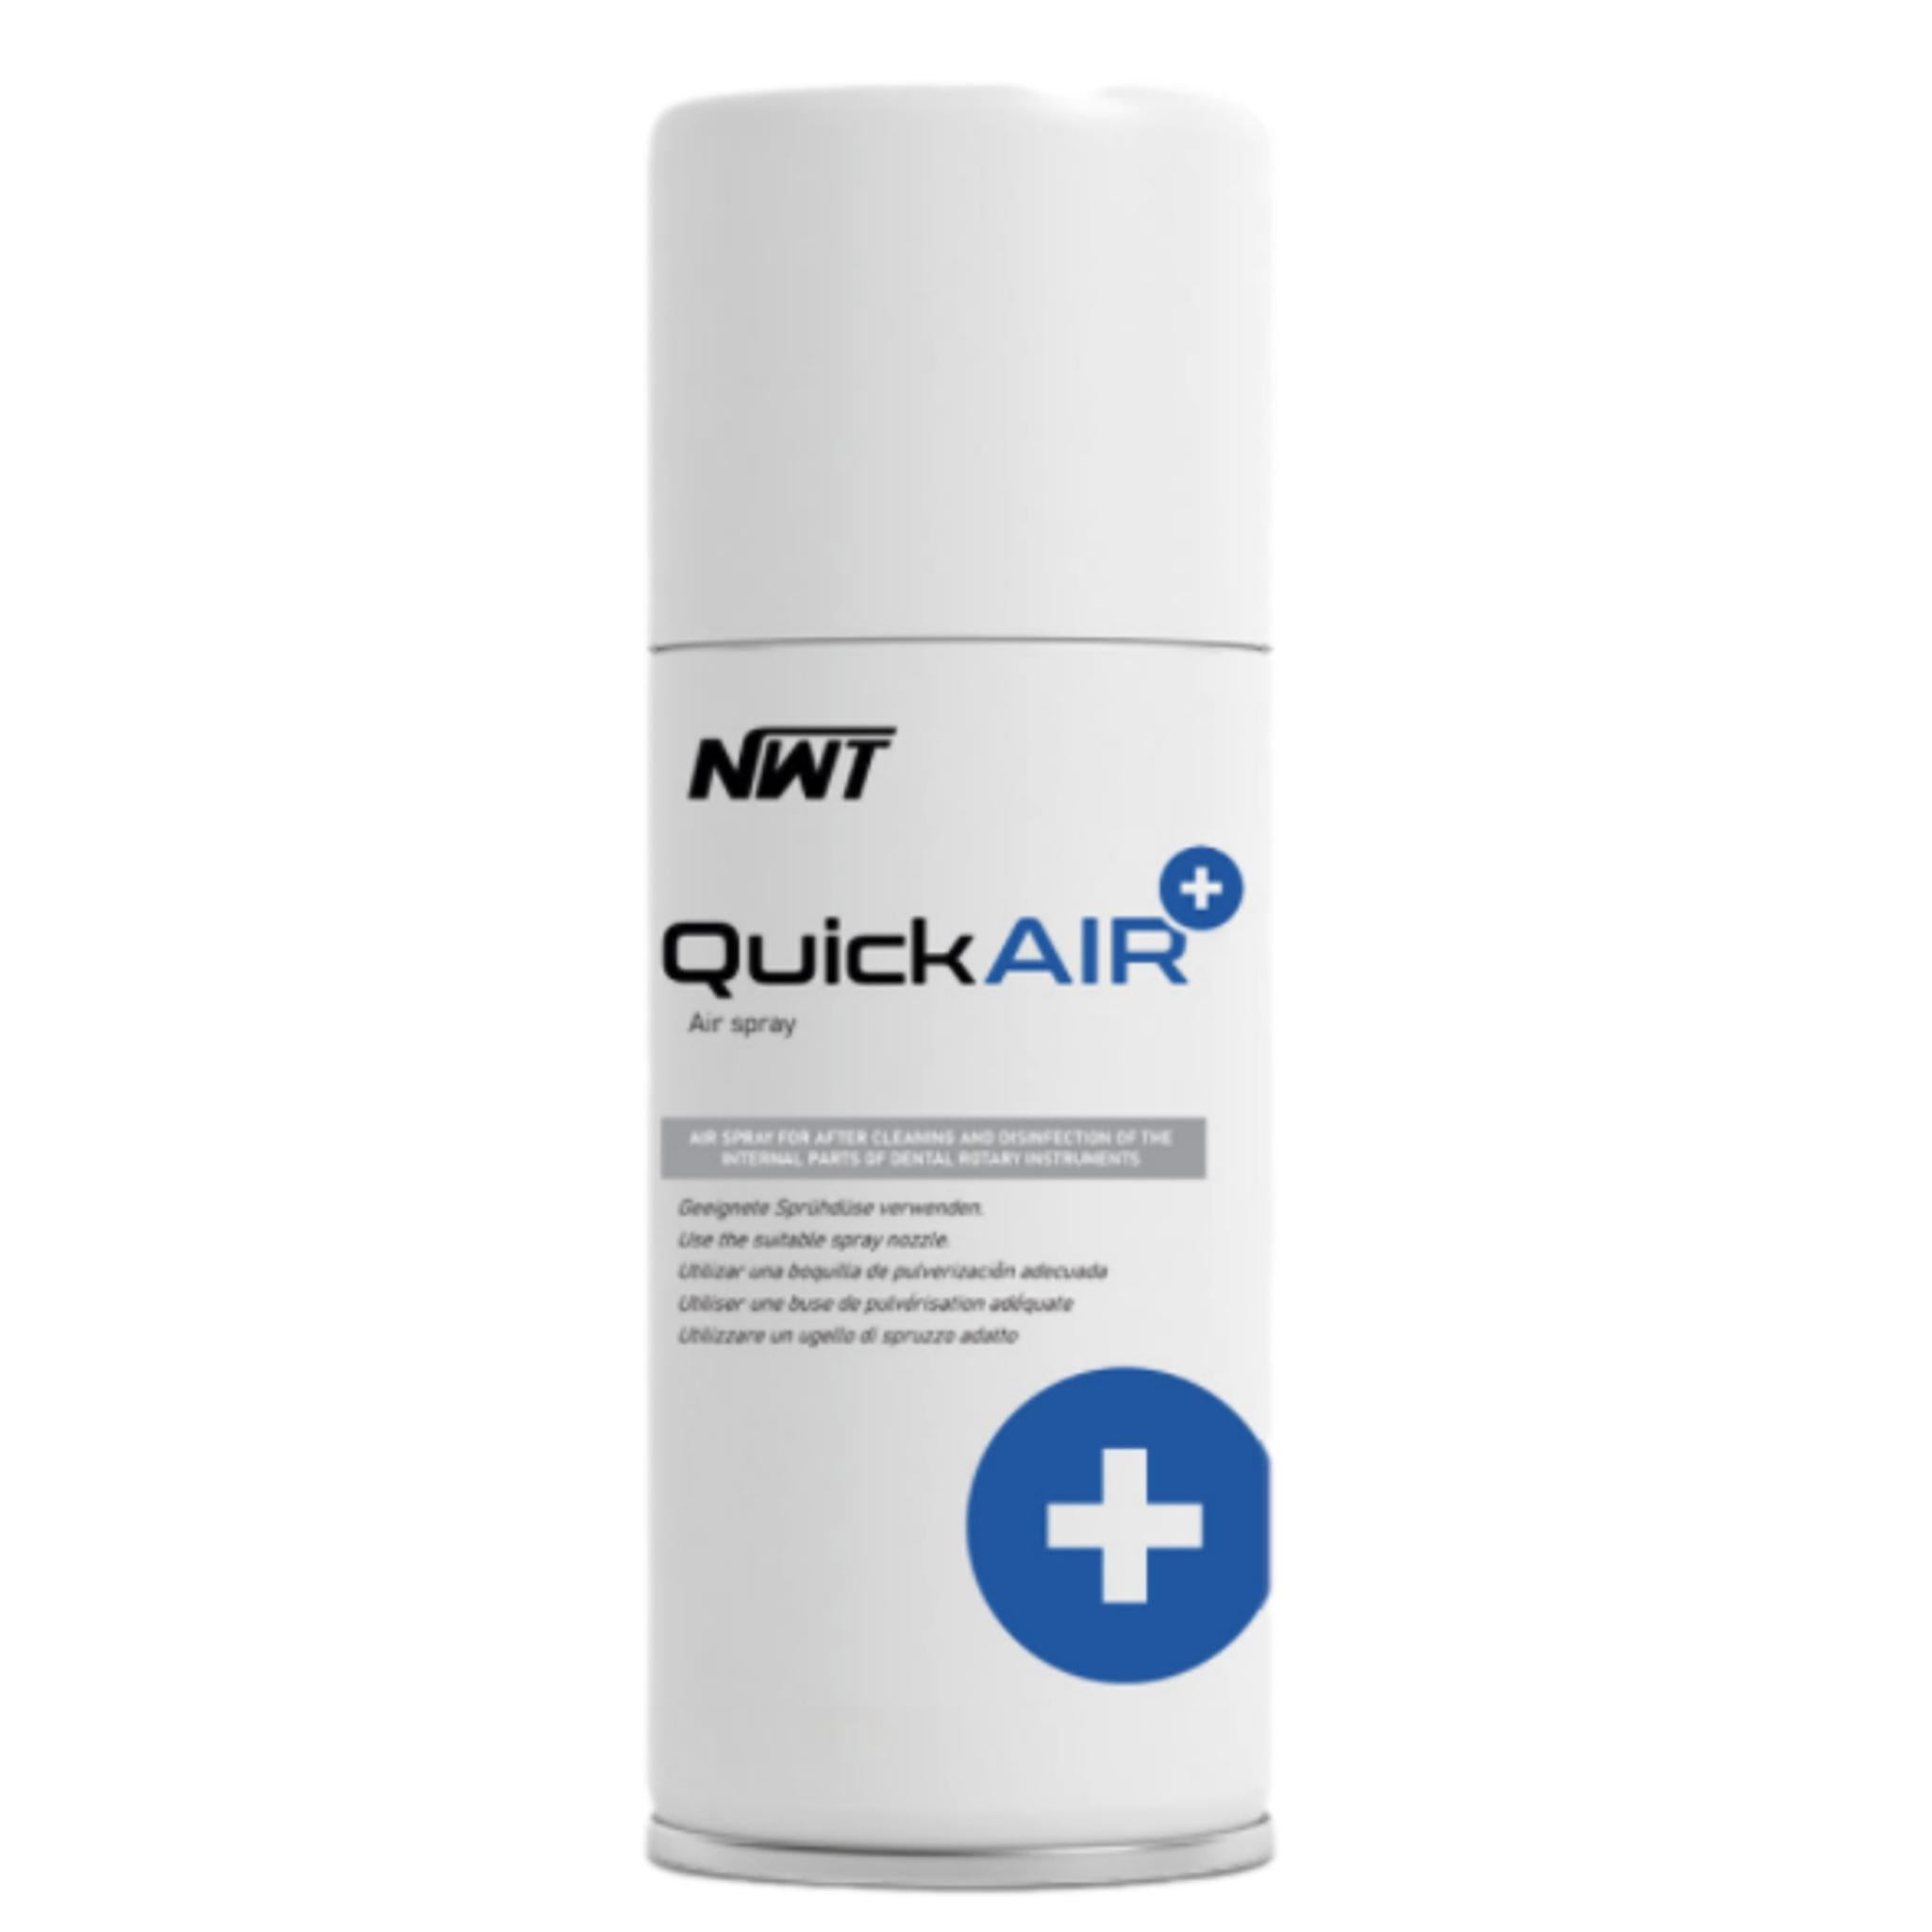 Spray de séchage QuickAIR - NWT